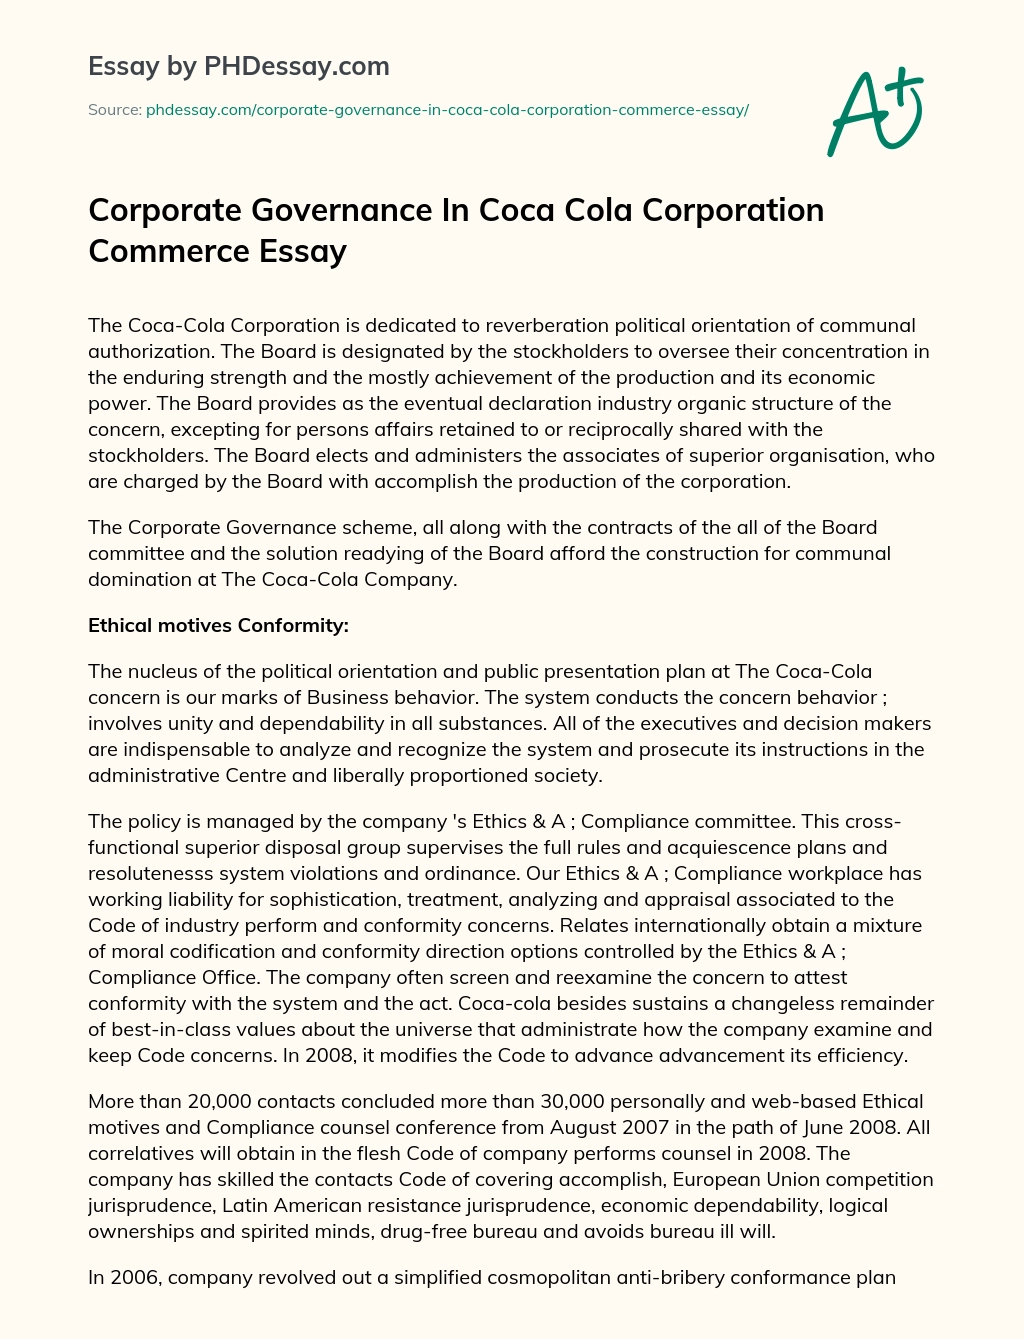 Corporate Governance In Coca Cola Corporation Commerce Essay essay